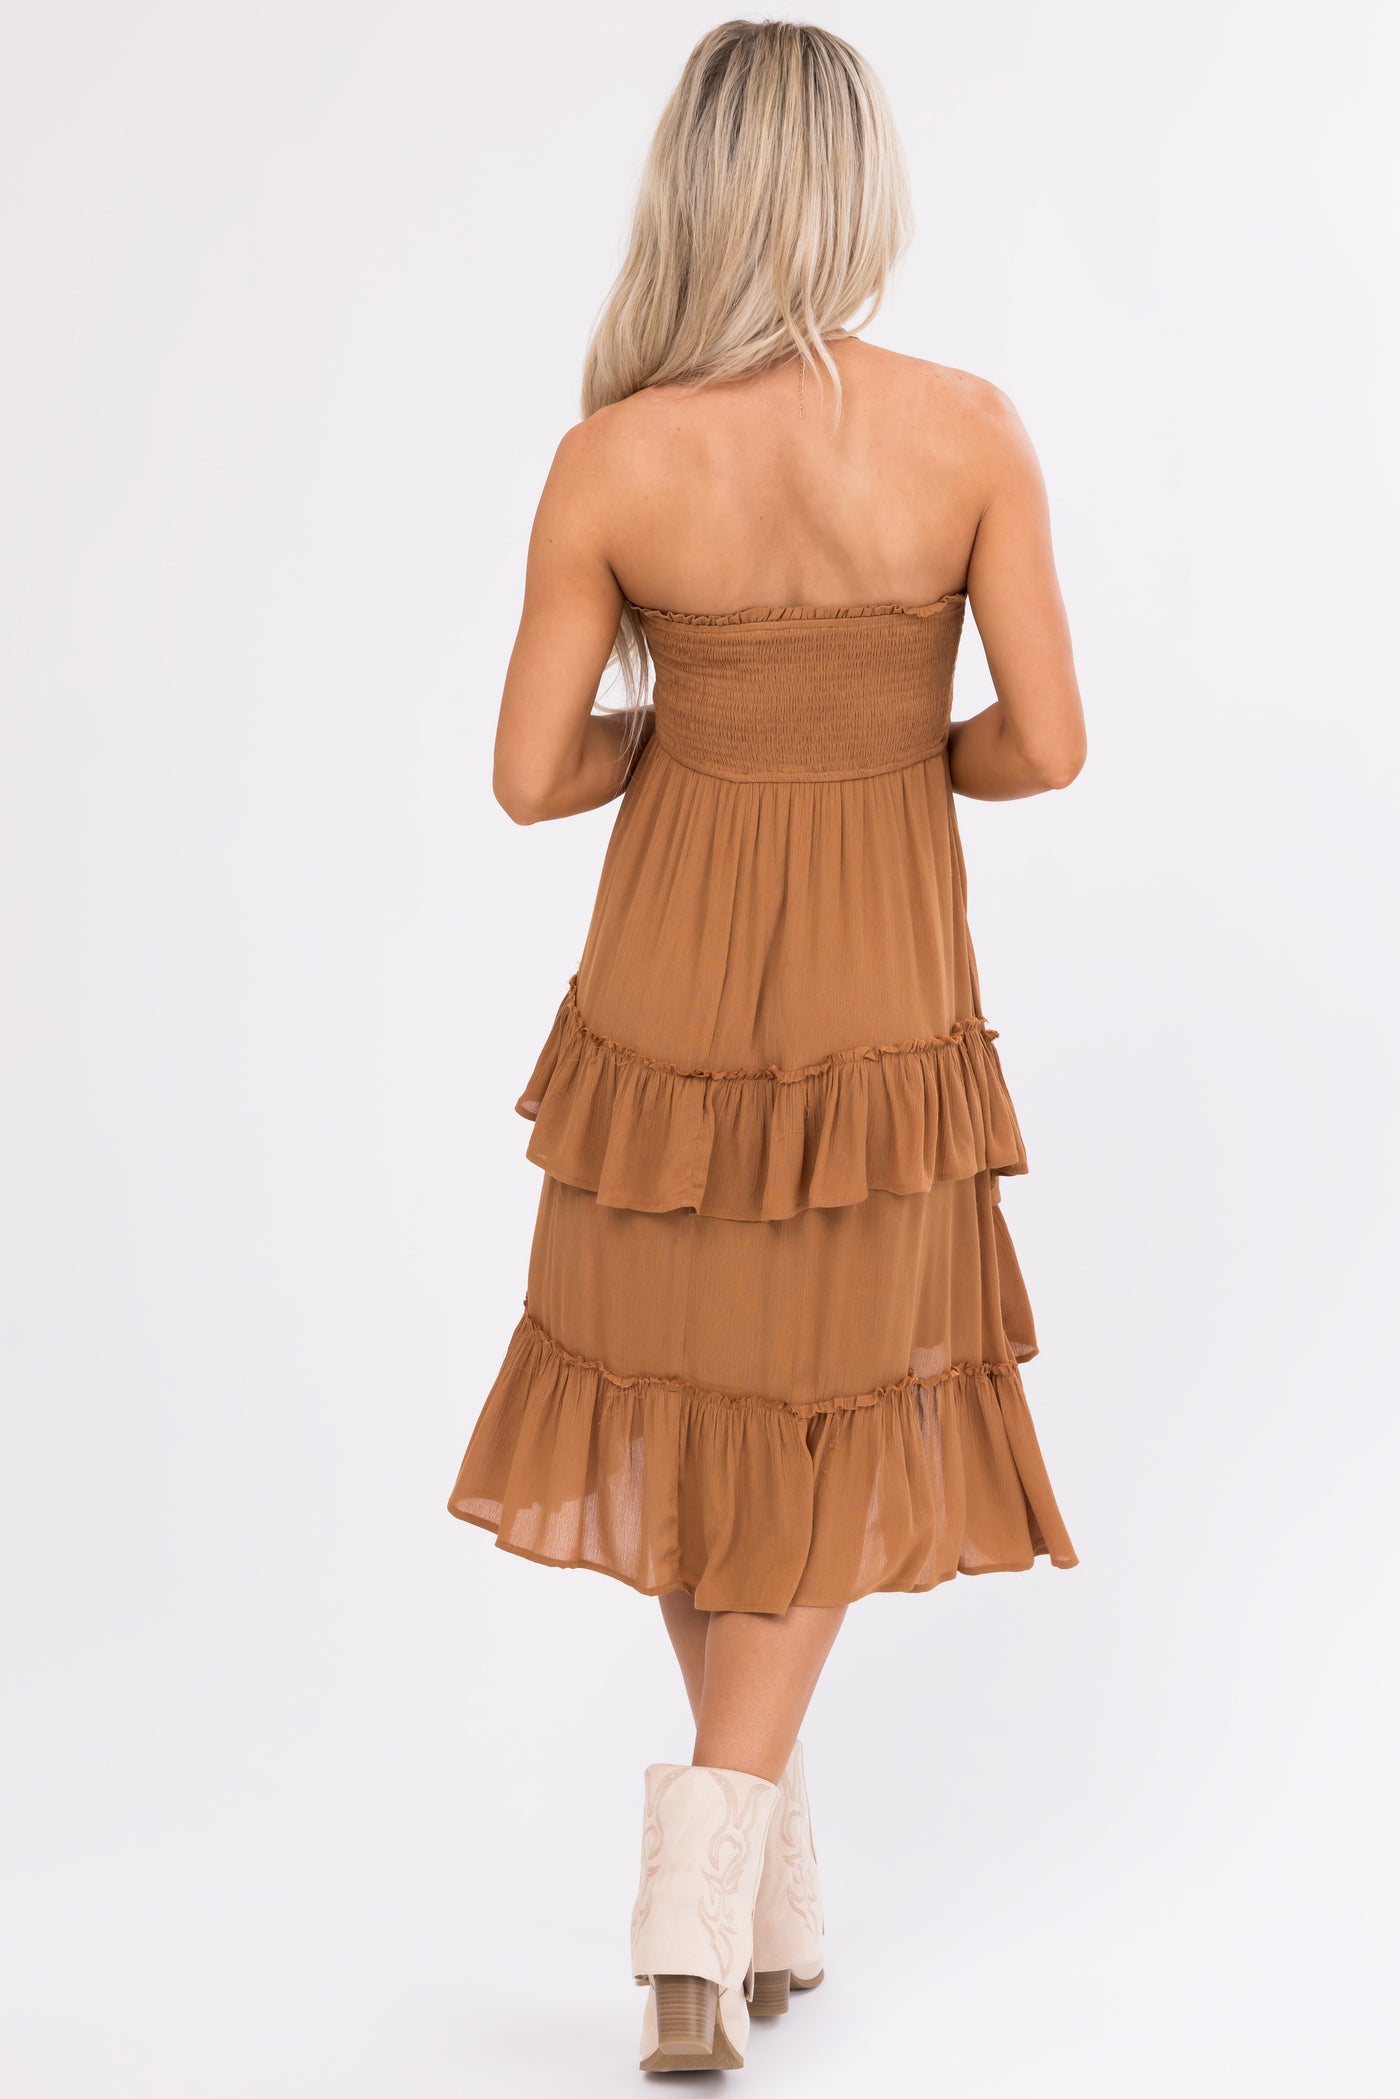 Cognac Smocked Convertible Midi Skirt Short Dress